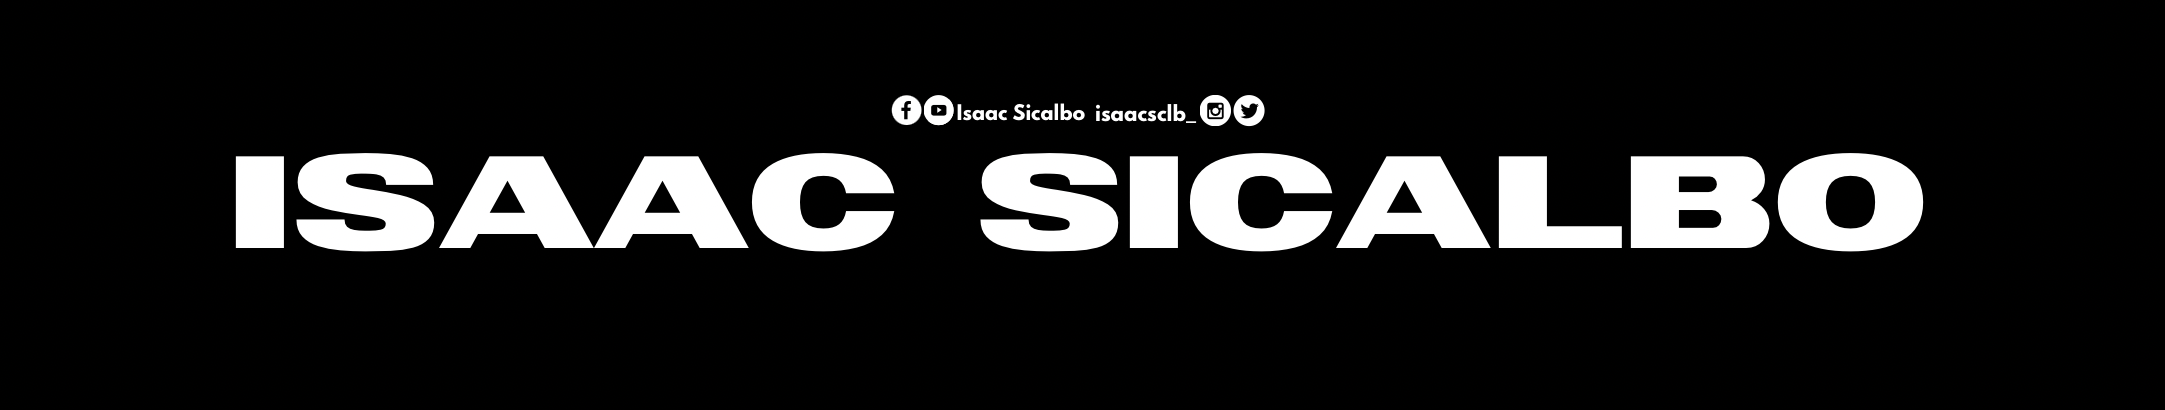 Rudolfo Isaac Sicalbo's profile banner